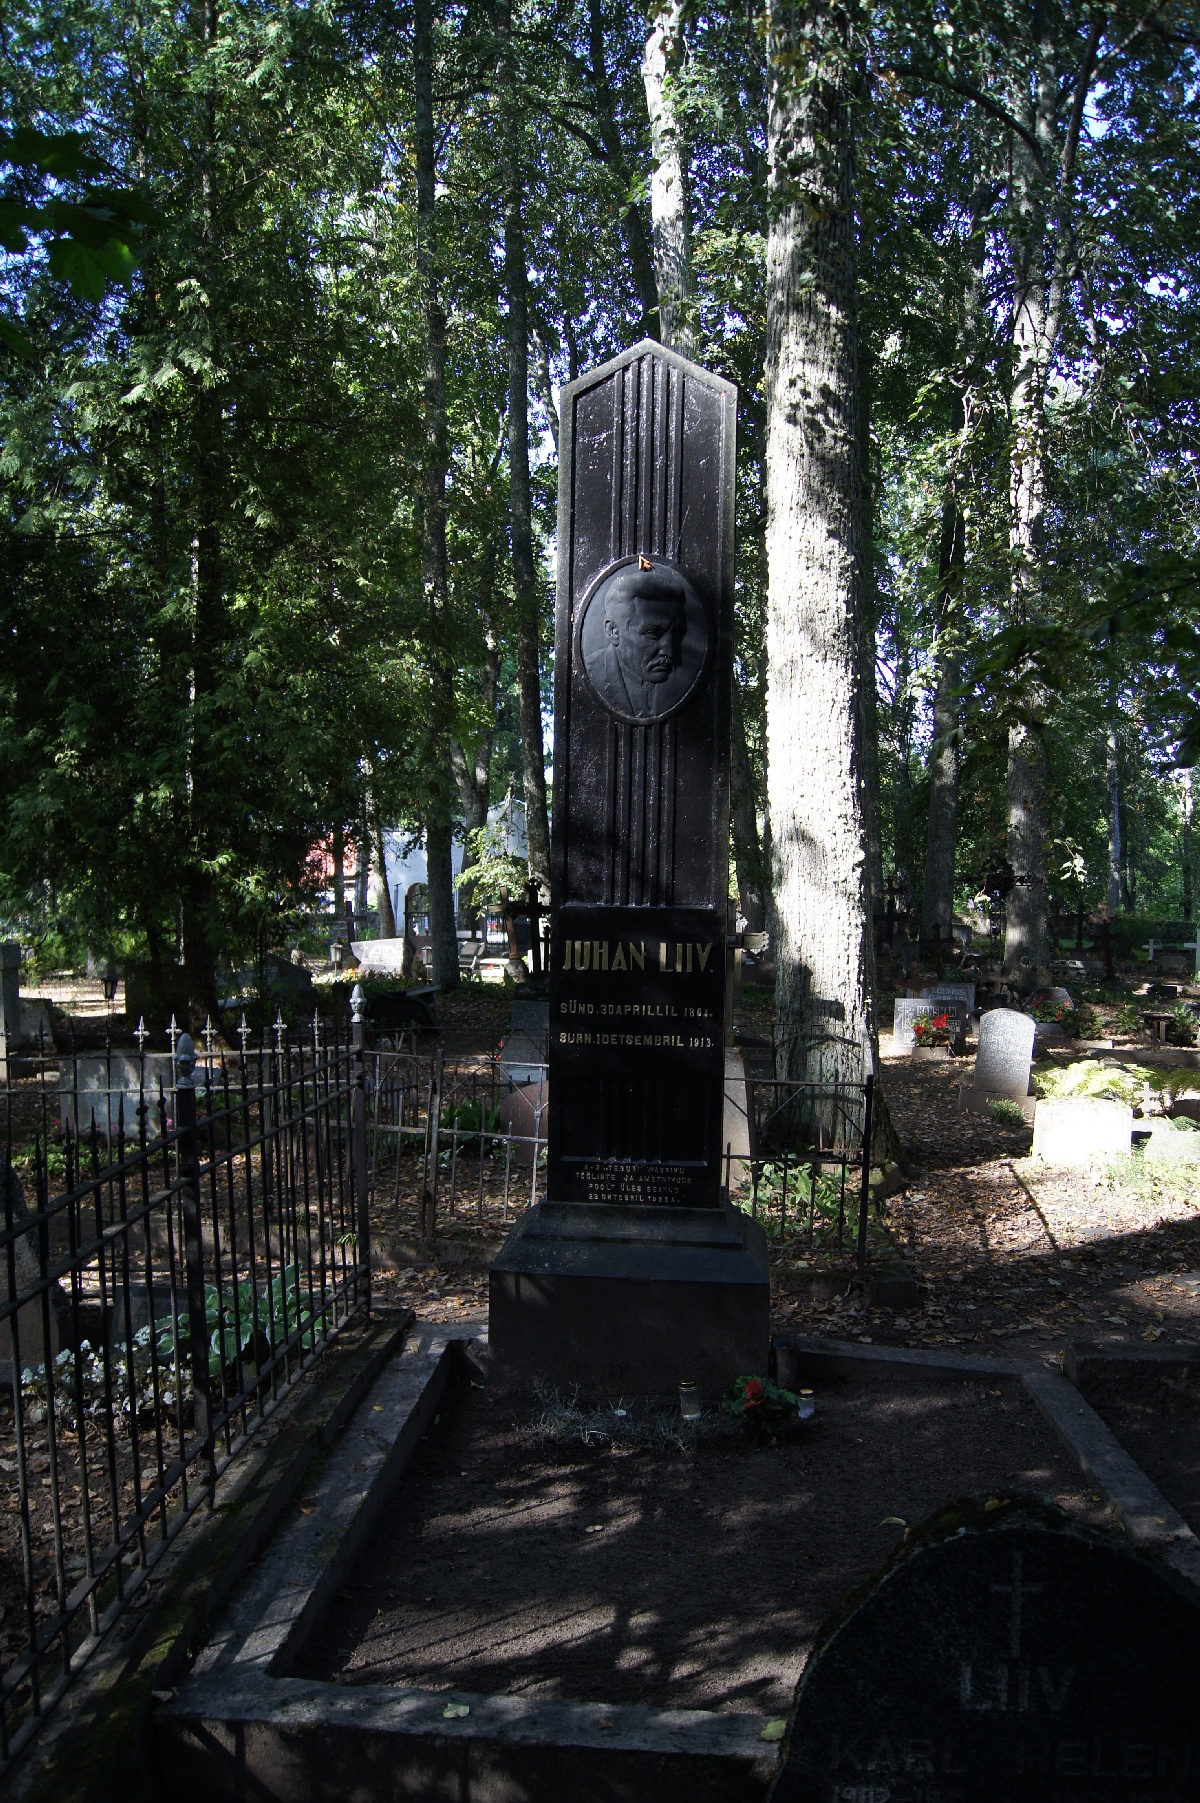 The highest stone. Juhan Liiv. Alatskivi cemetery.